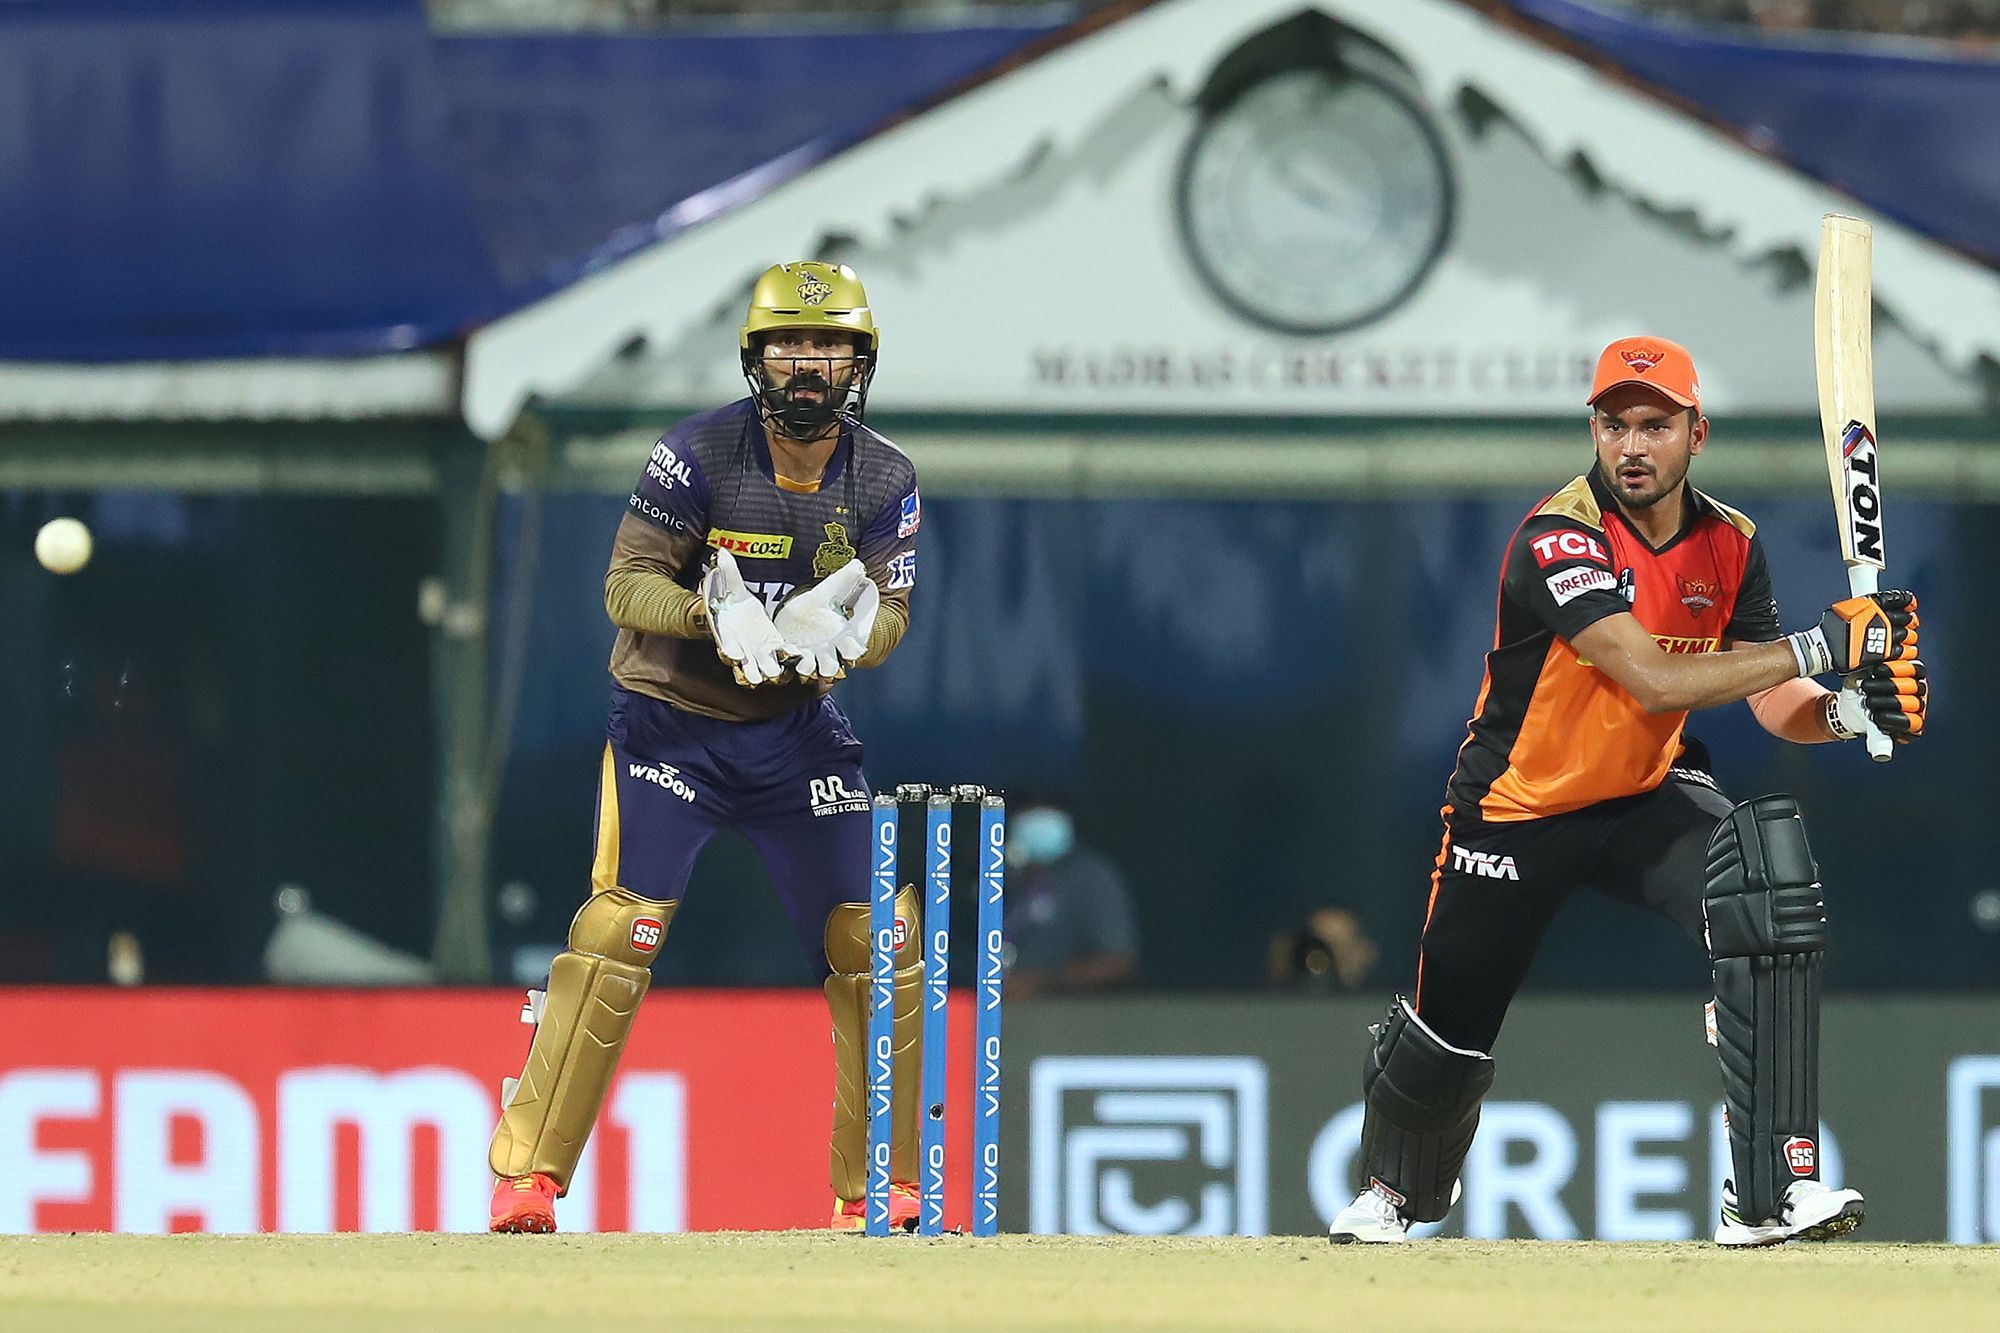 Manish Pandey scored unbeaten 61 runs but failed to win match for SRH | BCCI/IPL